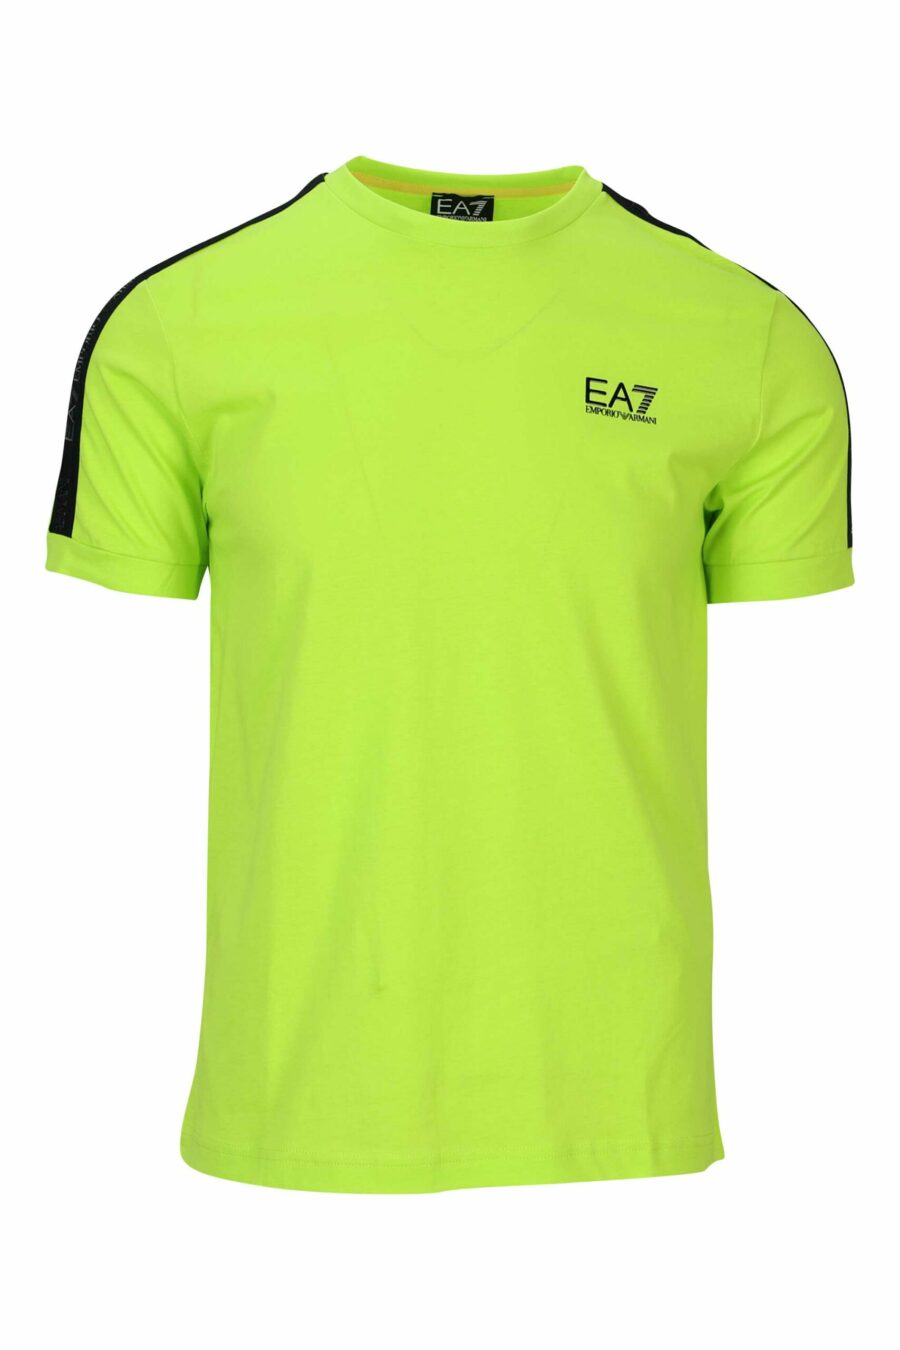 T-shirt vert tilleul avec mini-logo noir "lux identity" - 8058947490943 scaled